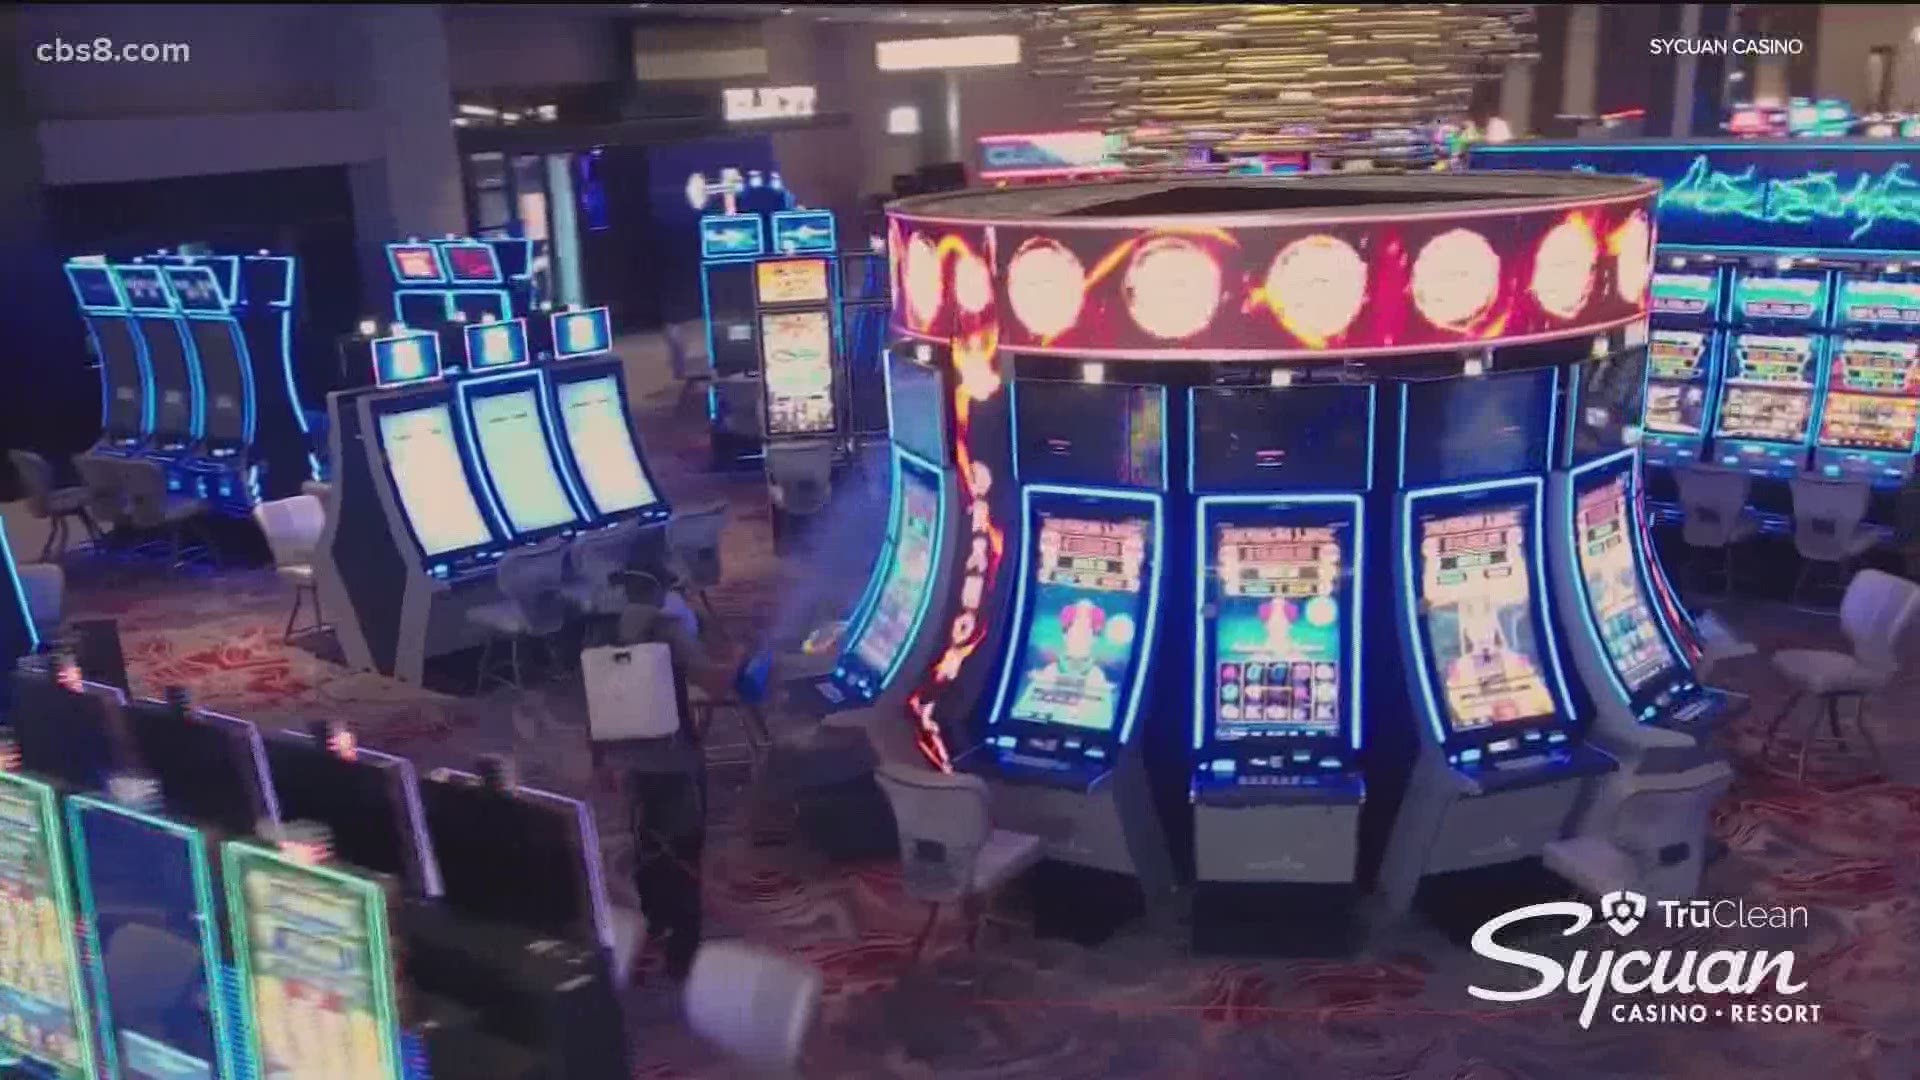 Casino close to houston texas